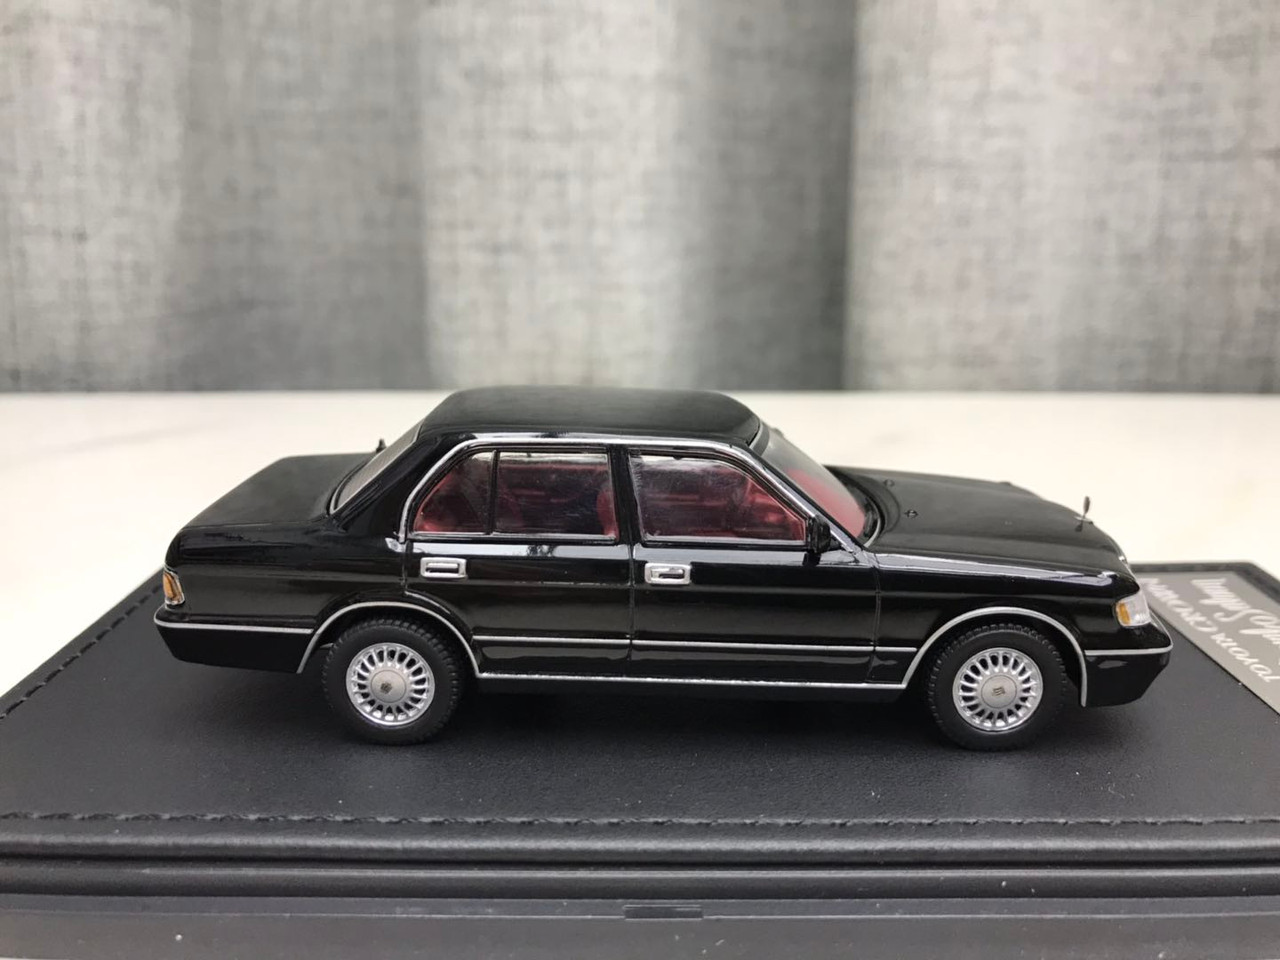 1/43 STC Dealer Edition 1991-1995 Toyota Crown (Black) Car Model